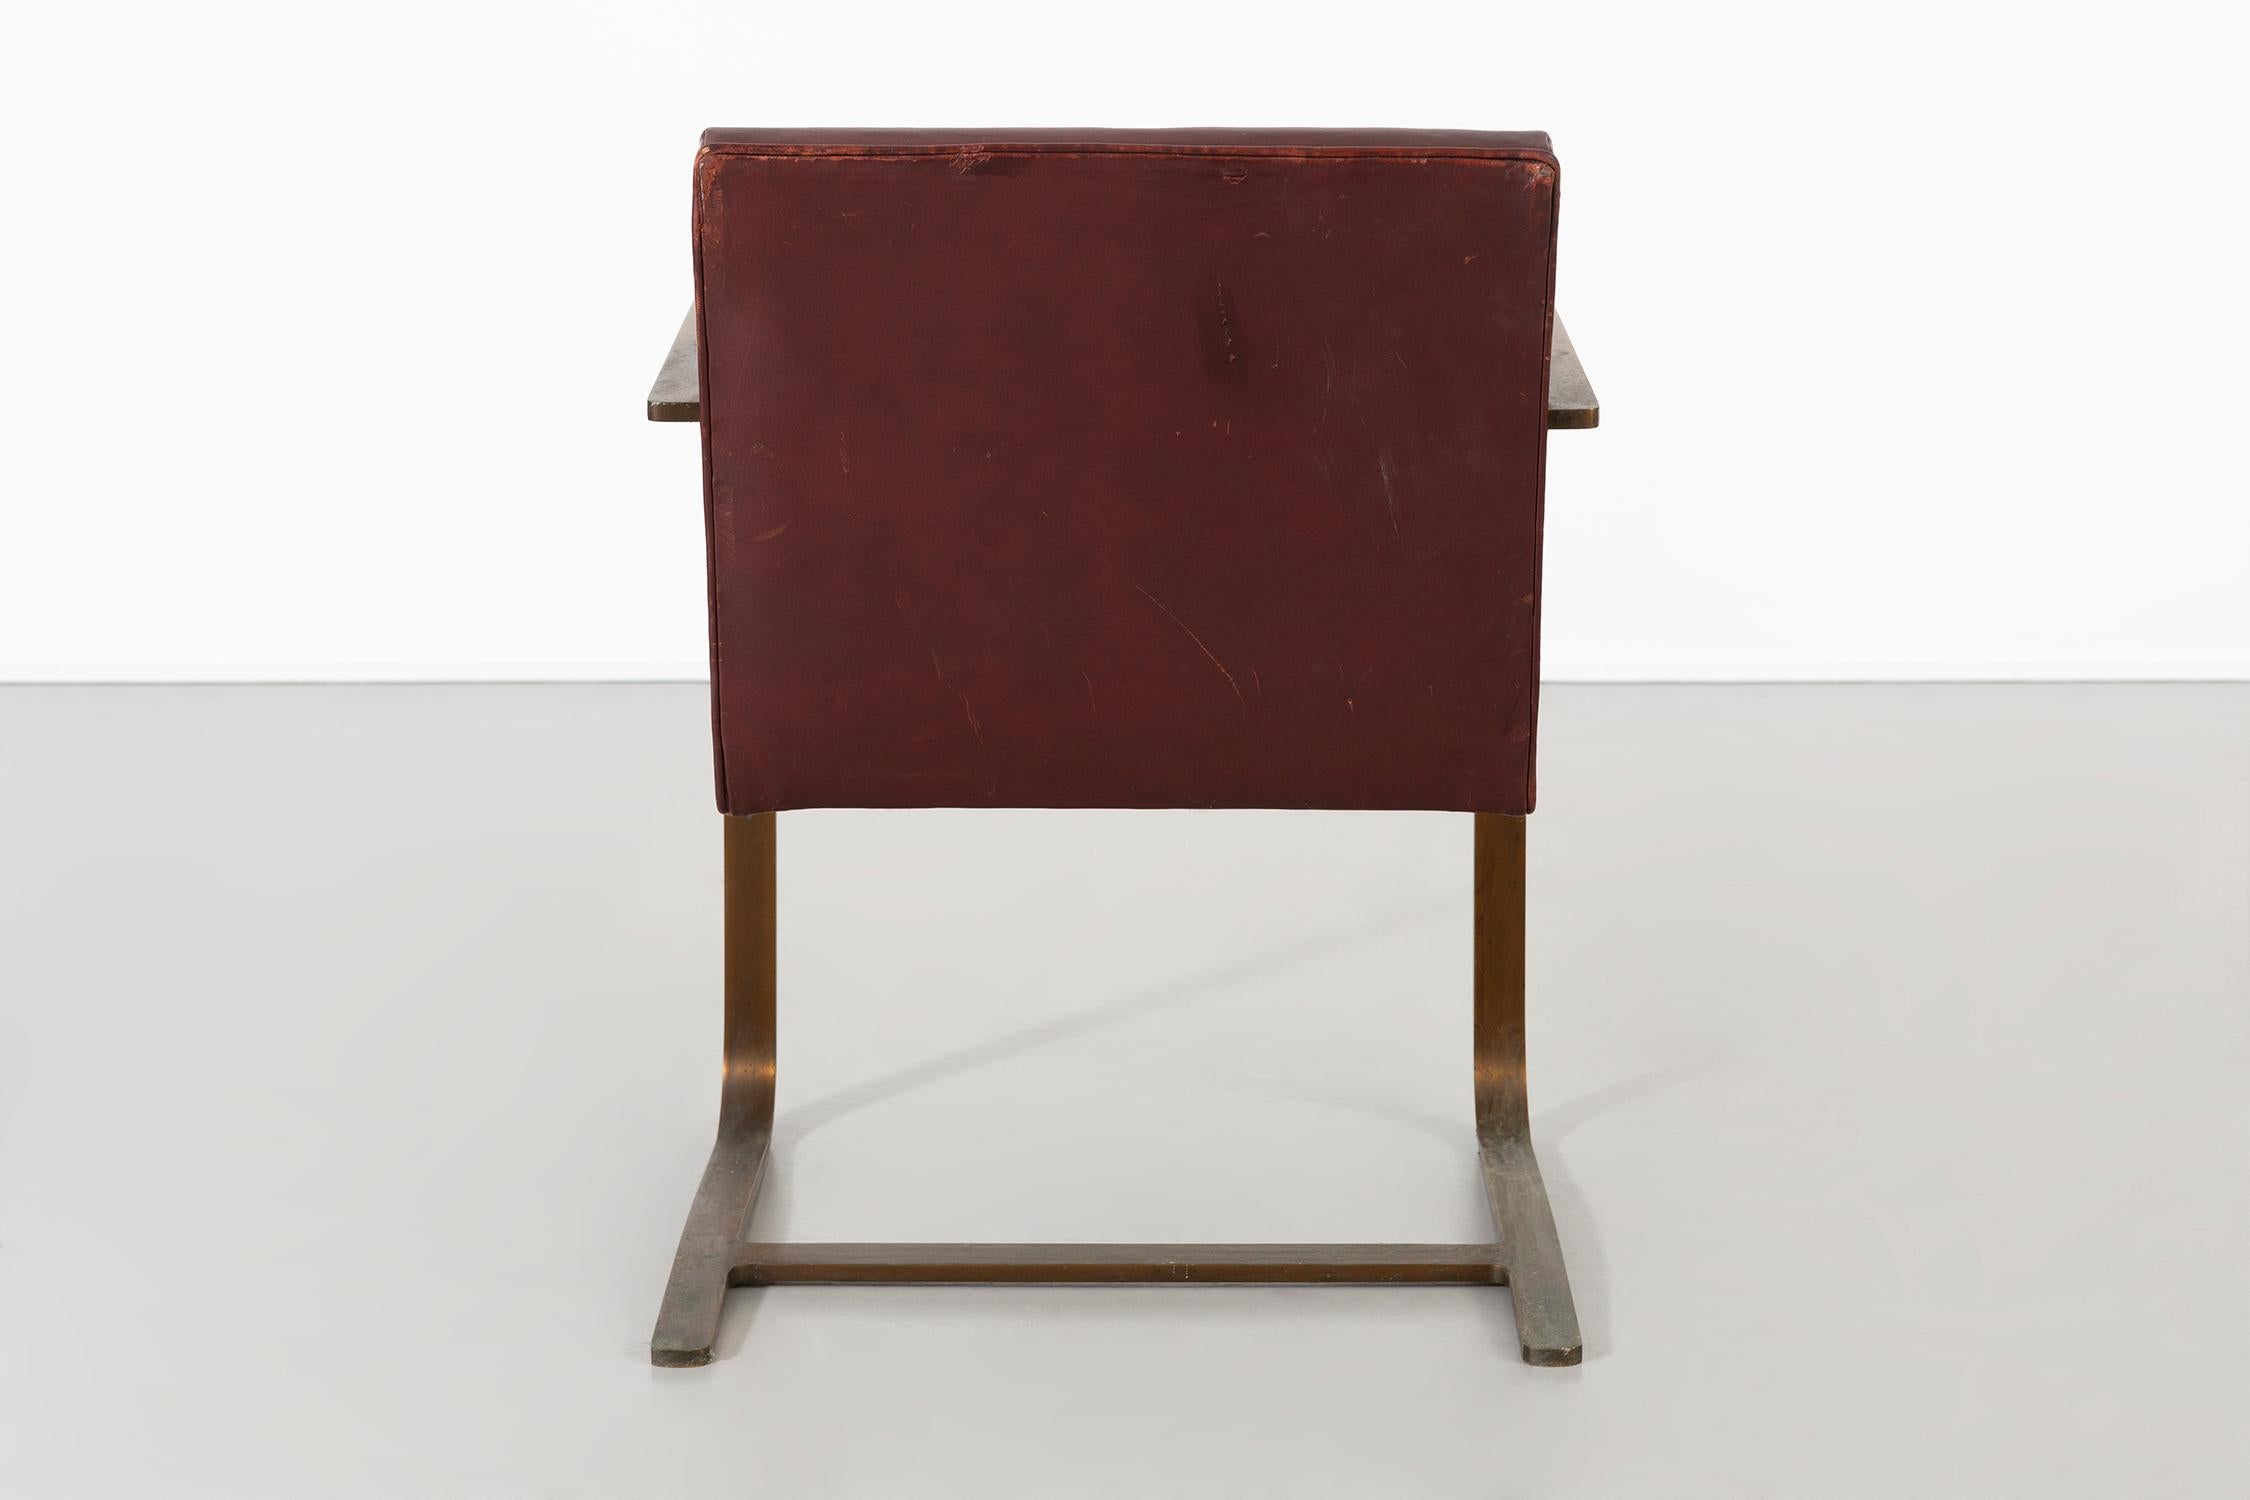 Mies van der Rohe for Brueton Bronze Flat Bar Brno Chairs 1